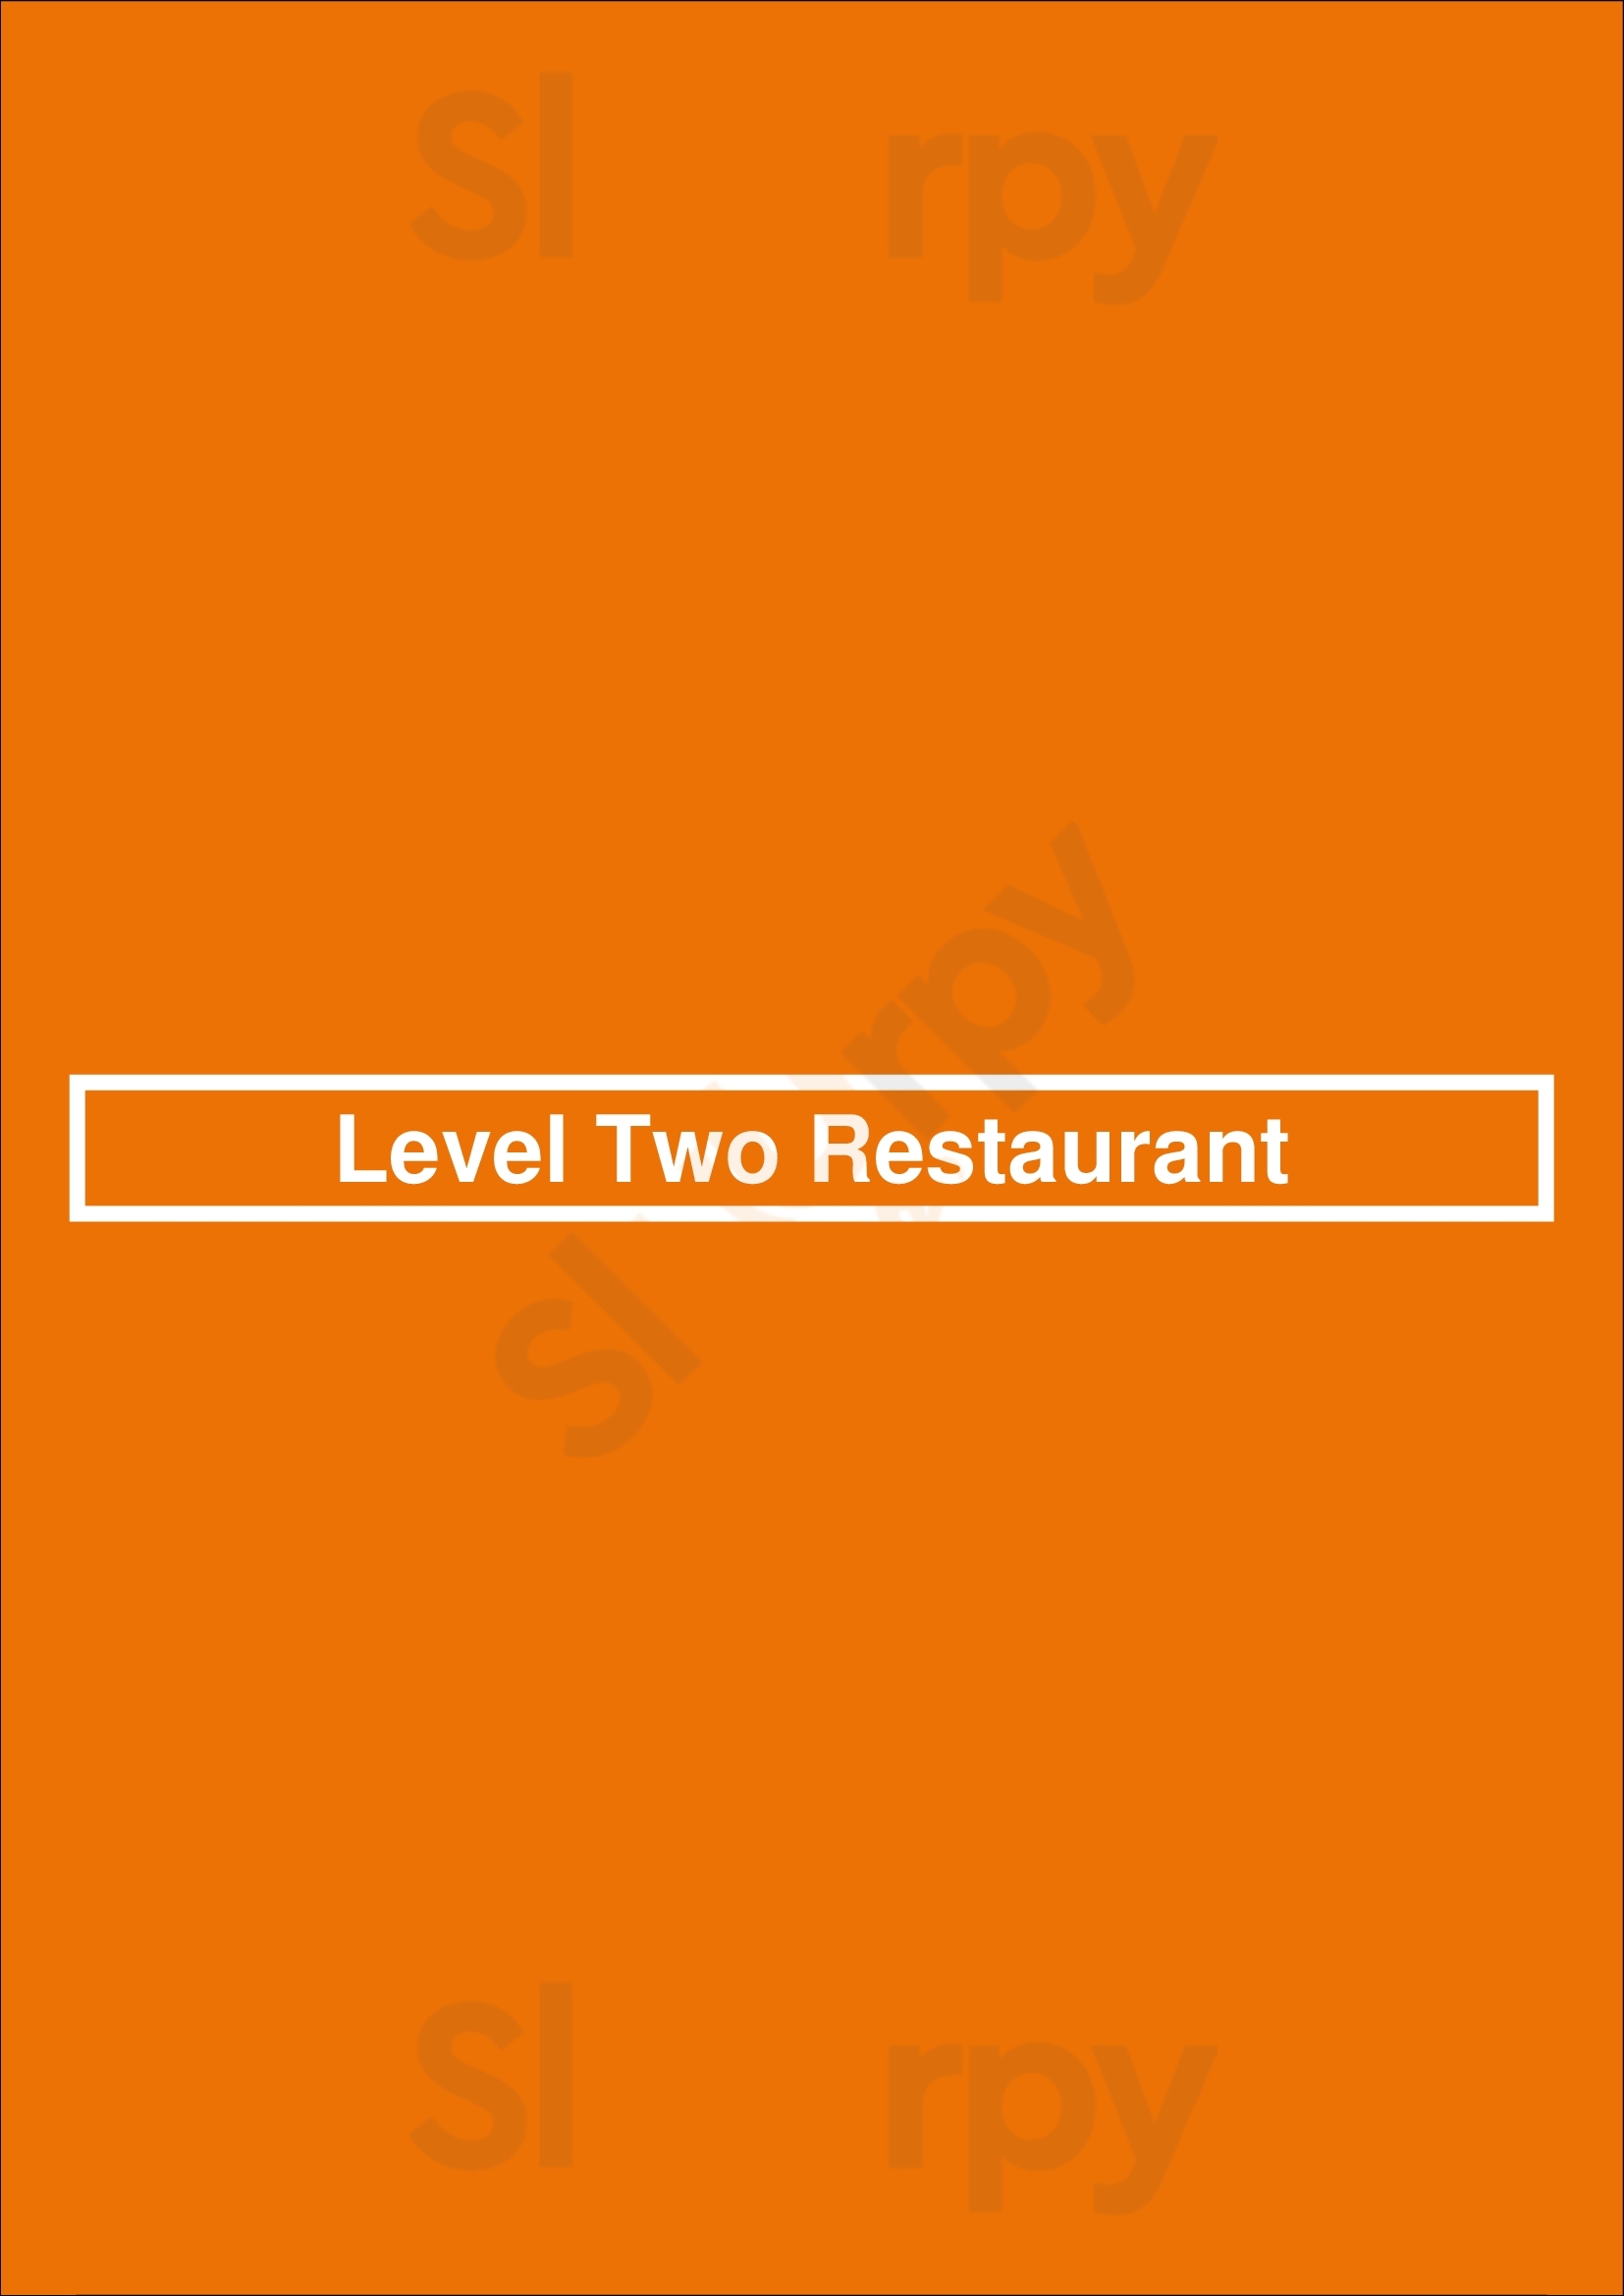 Level Two Restaurant Chicago Menu - 1